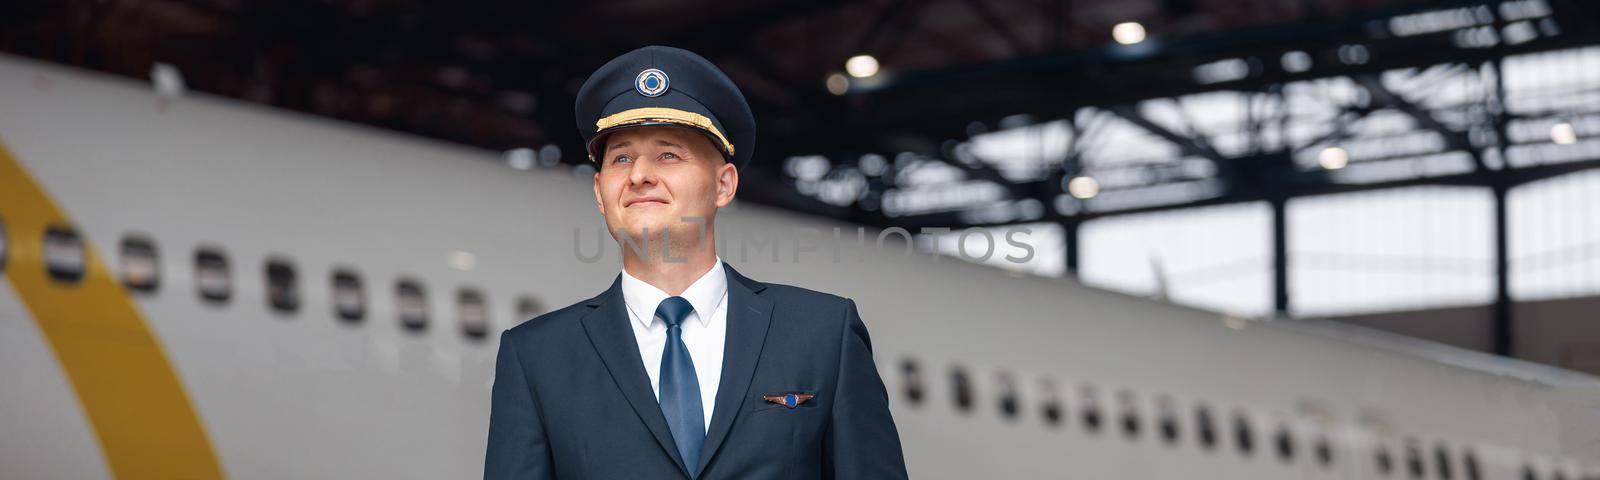 Thoughtful pilot in uniform looking away, standing in front of big passenger airplane in airport hangar by Yaroslav_astakhov